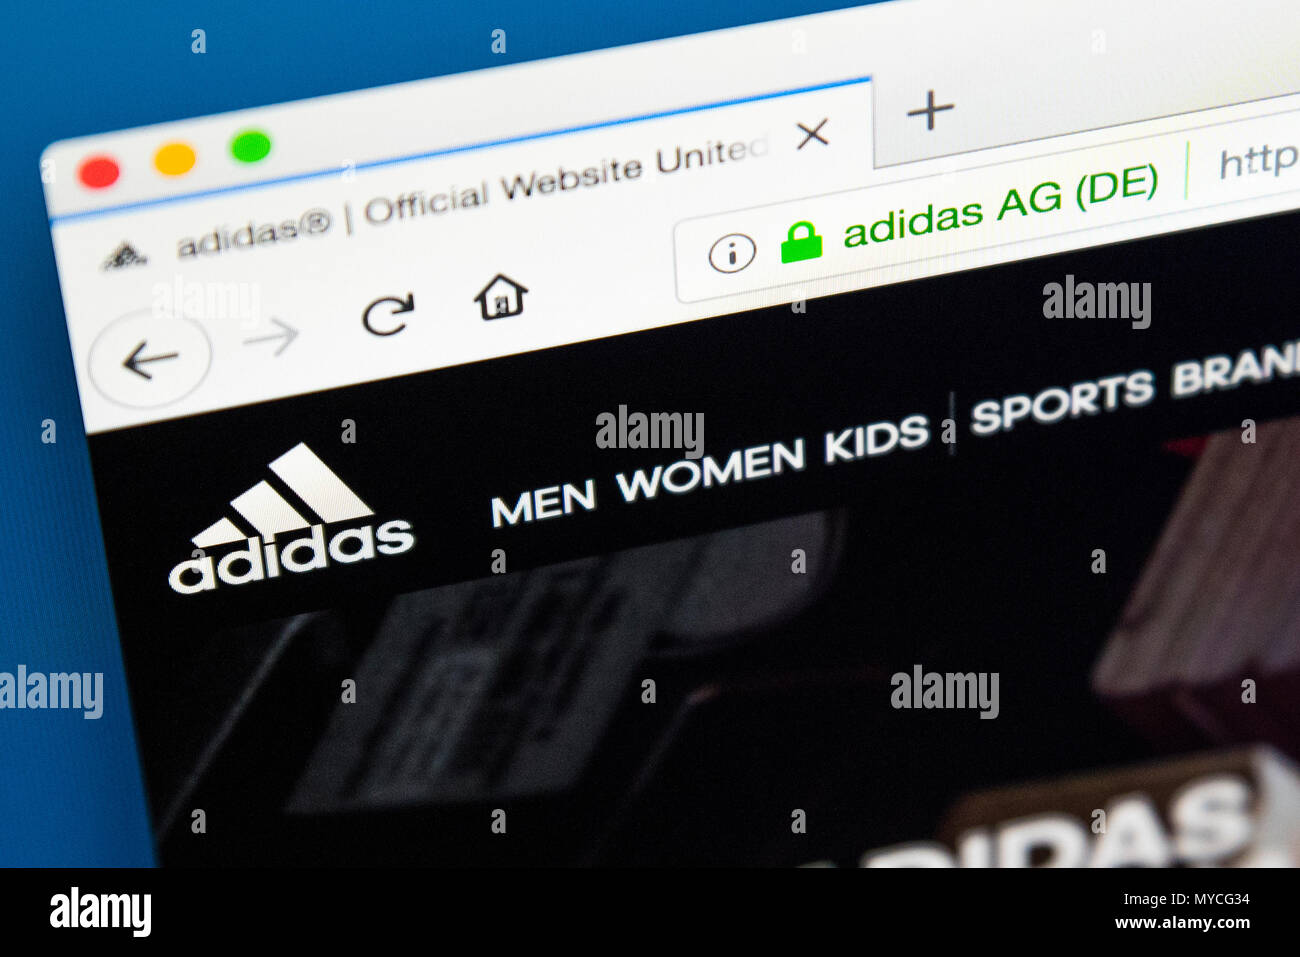 adidas uk website